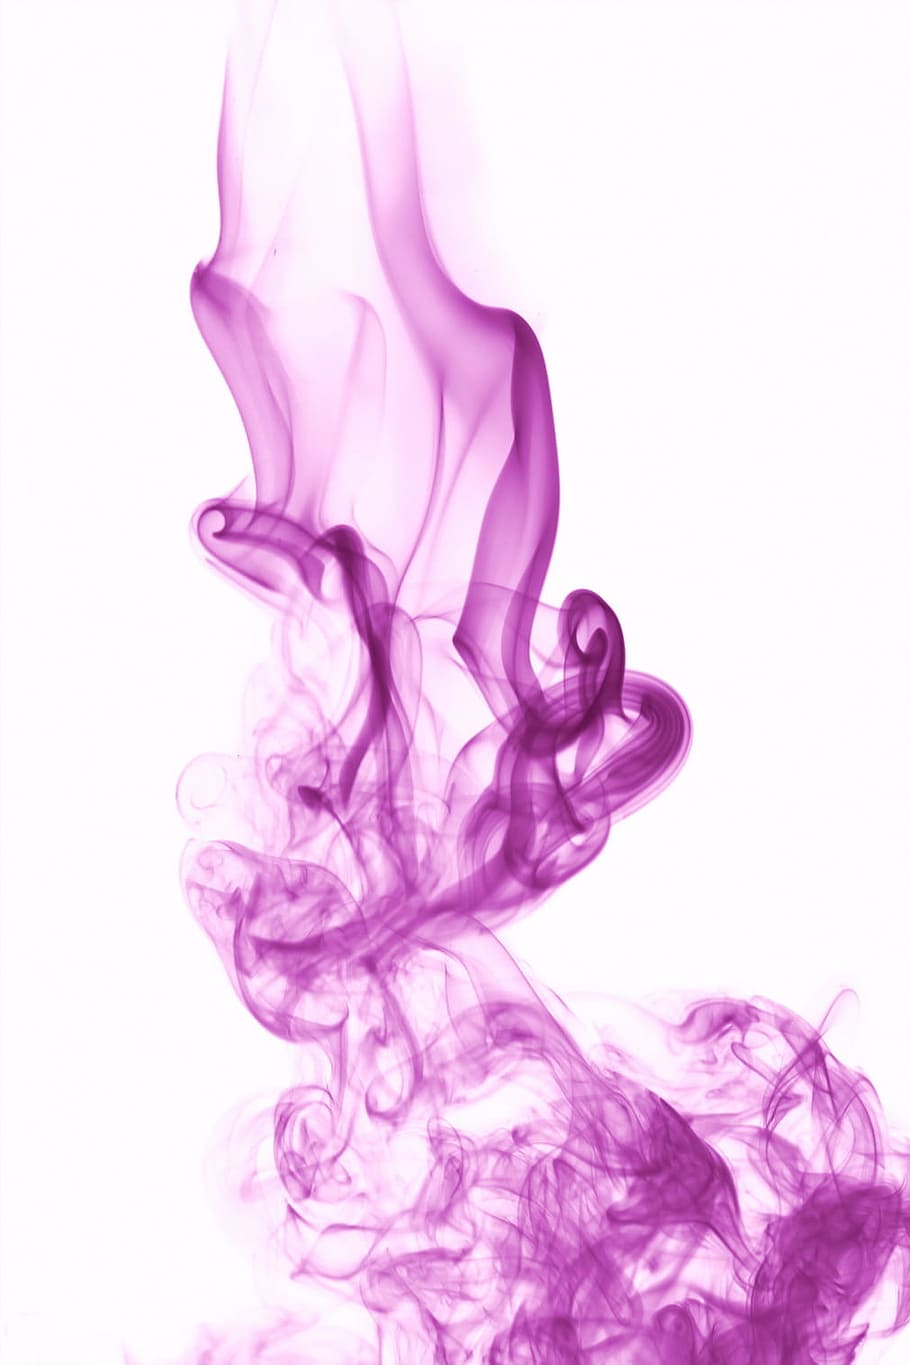 Resumen, aire, aroma, arte, telón de fondo, fondo, violeta, quema, color, concepto